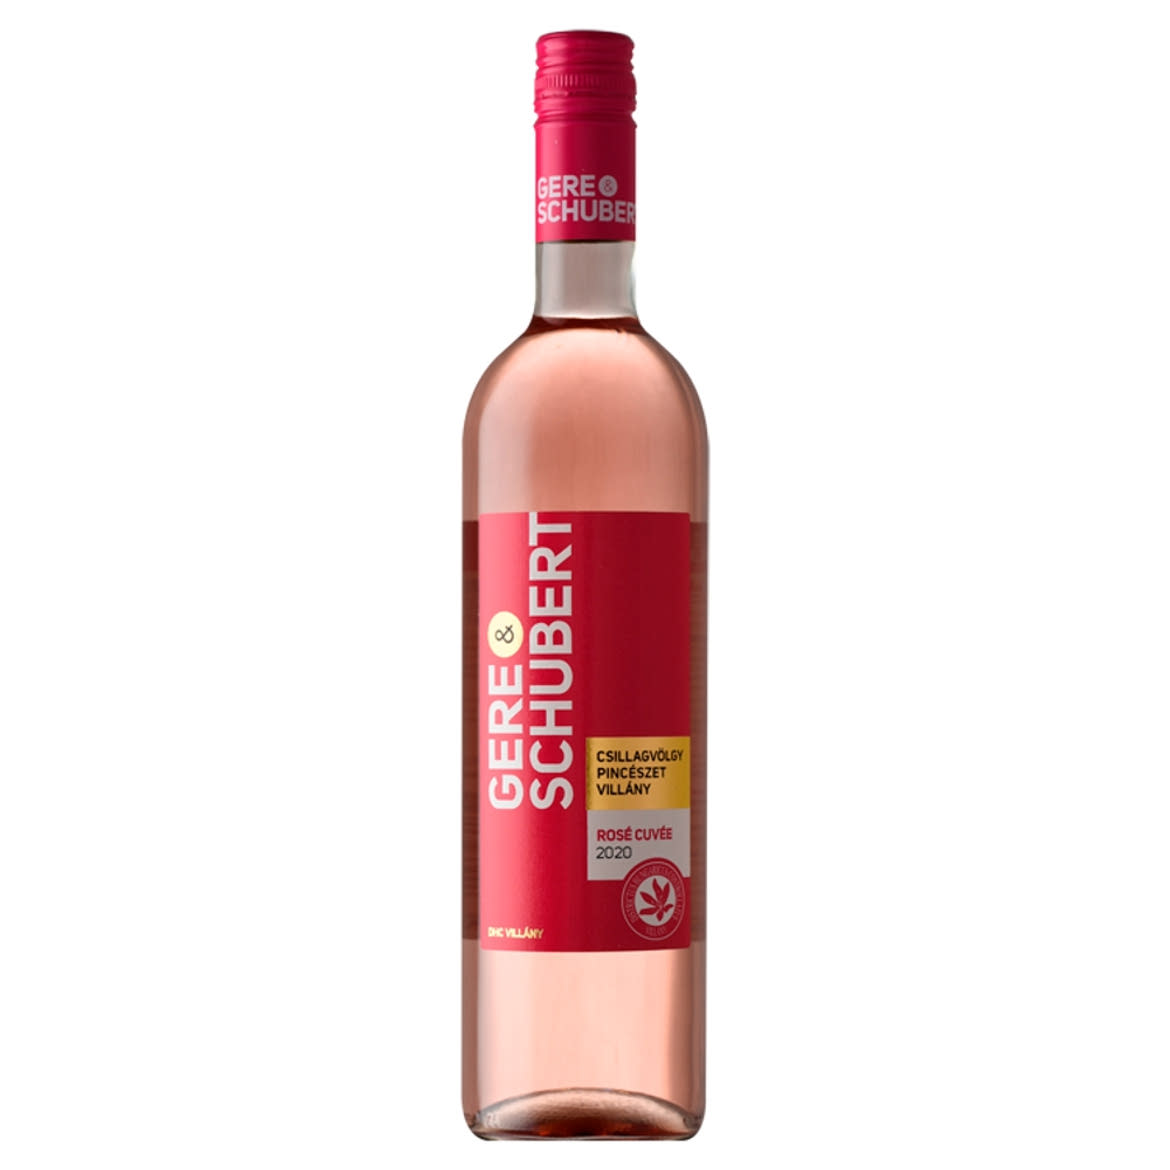 Gere - Schubert Rosé Cuvée száraz rosébor 12%